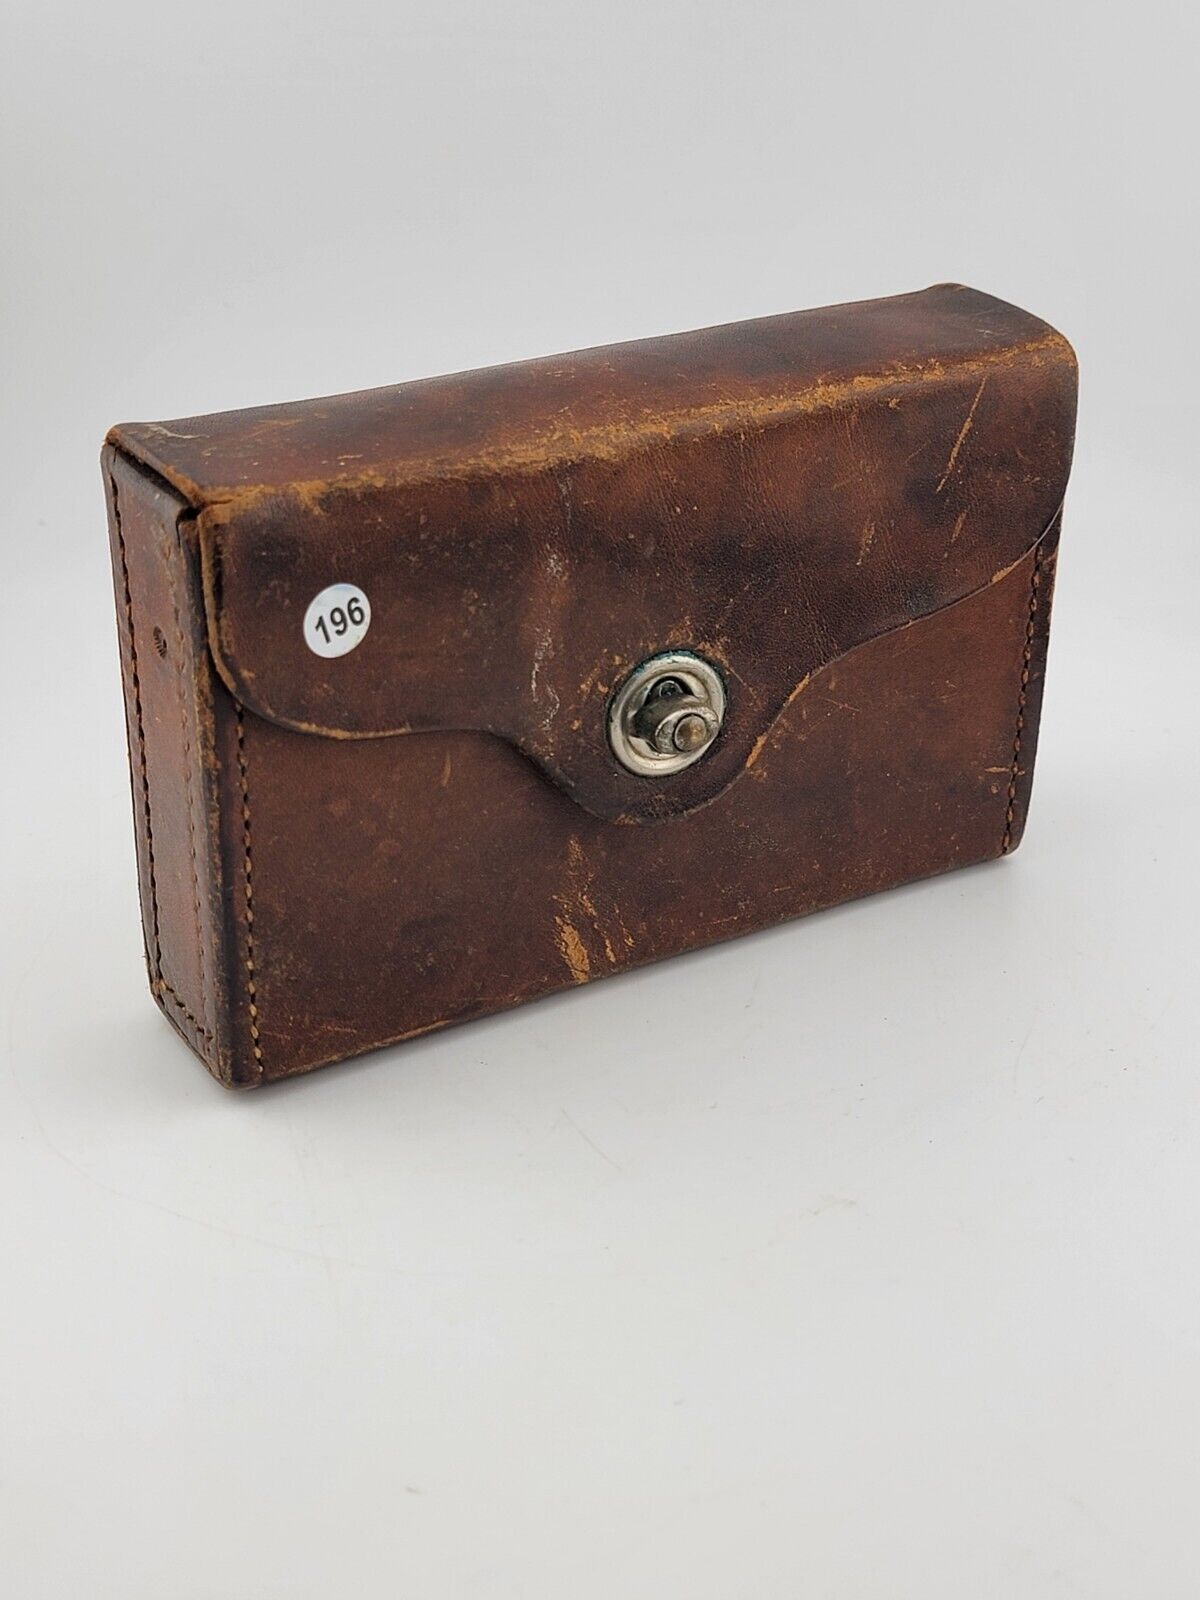 Rare Civil/Indian War Era George Lawrence Co. Brown Leather Cartridge Box. Clean